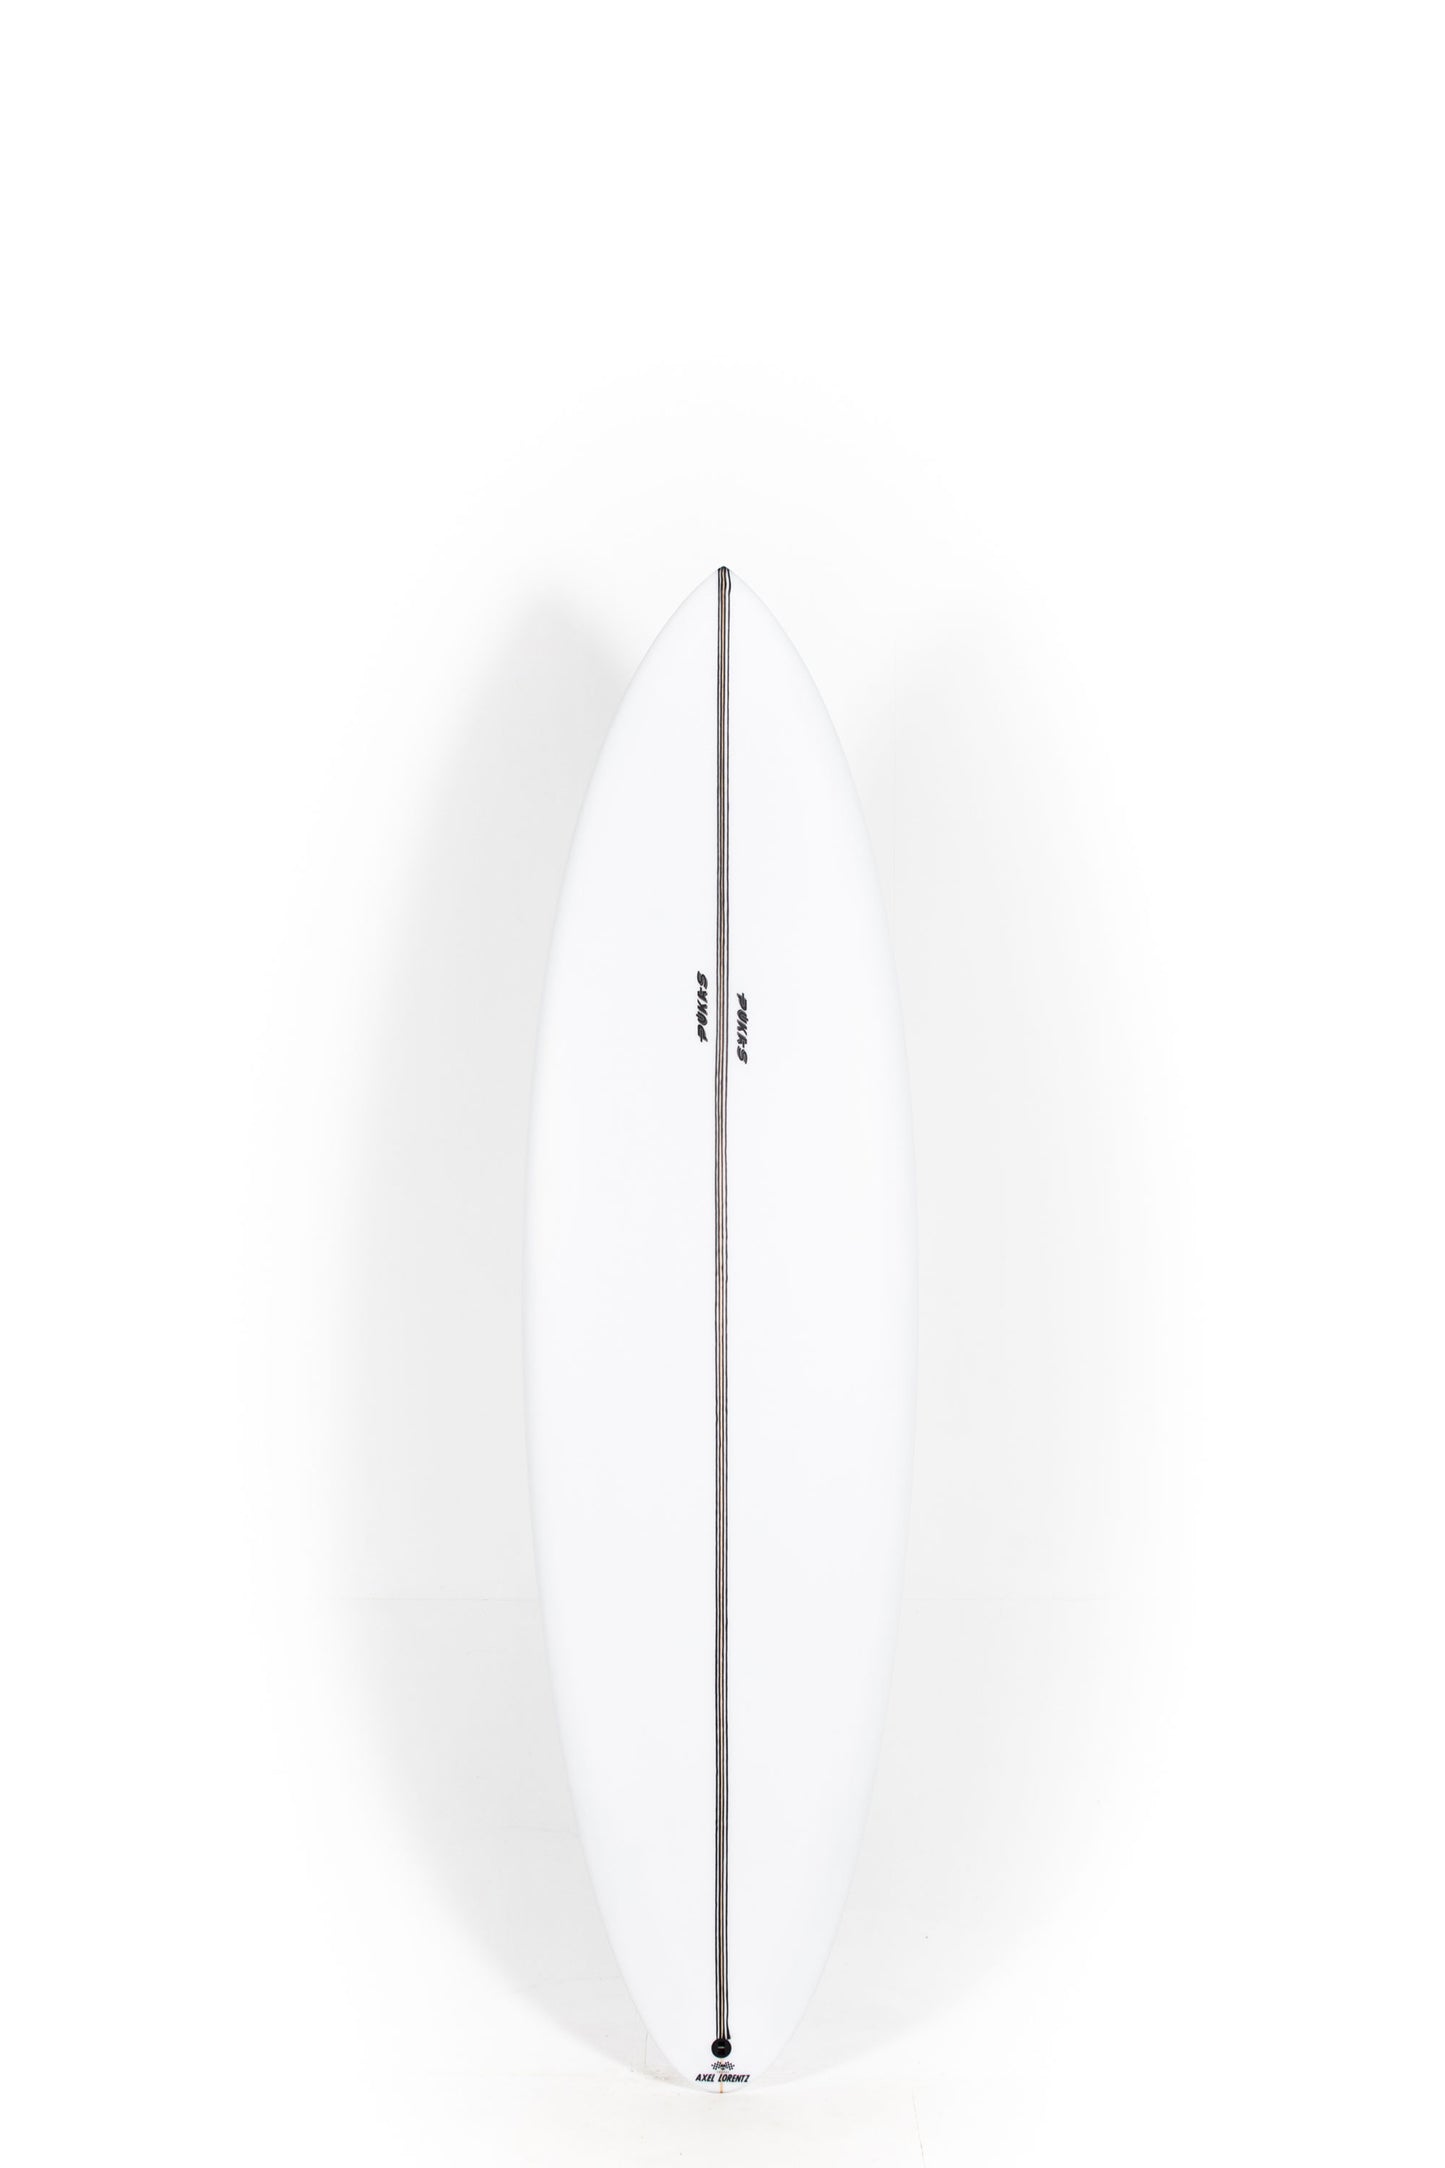 Pukas Surf Shop - Pukas Surfboard - 69ER EVOLUTION by Axel Lorentz- 6’10” x 21,75 x 3 - 47,36L - AX09188